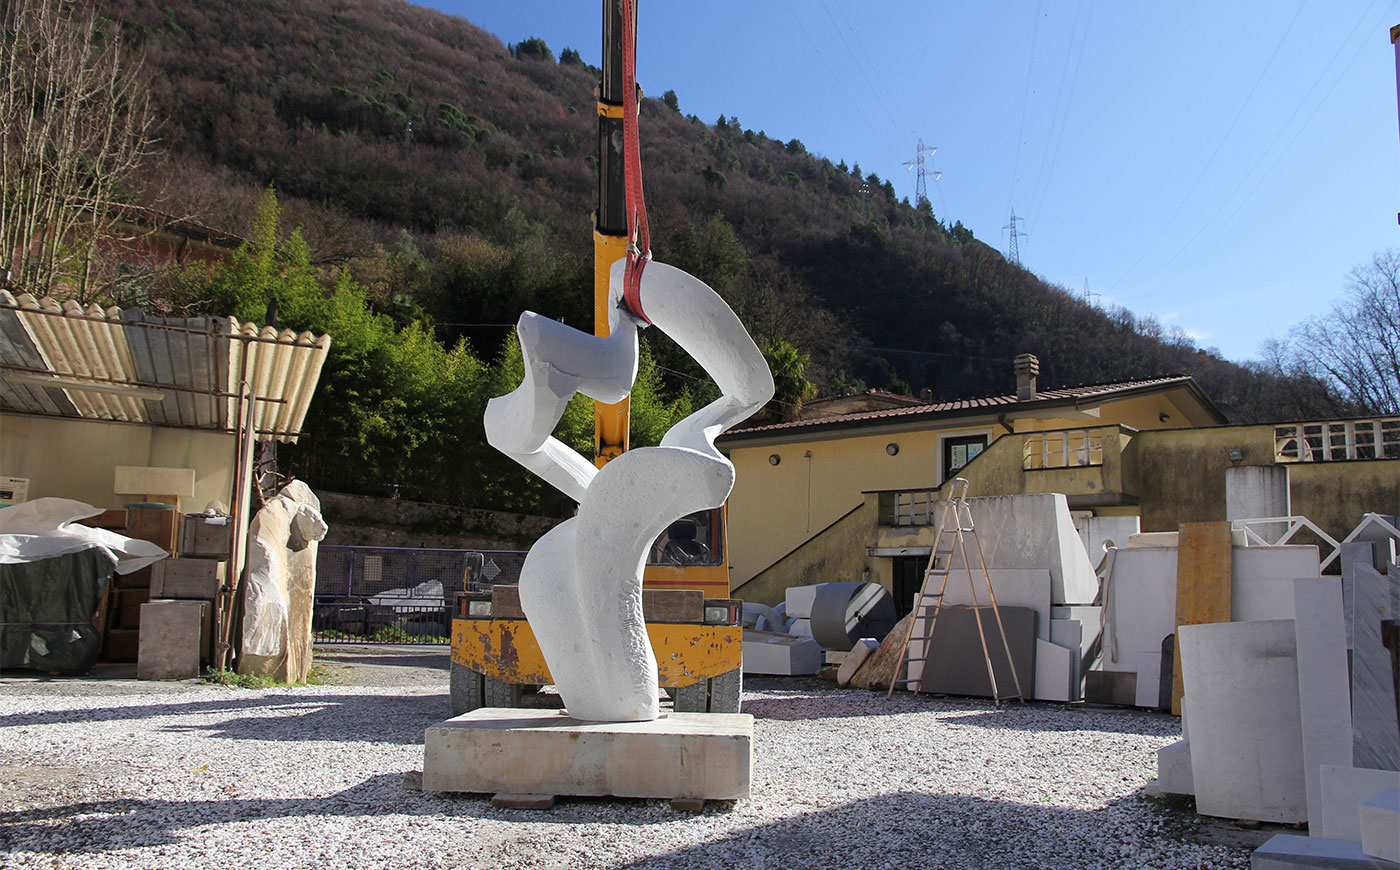 Richard Erdman commission modern sculpture installation